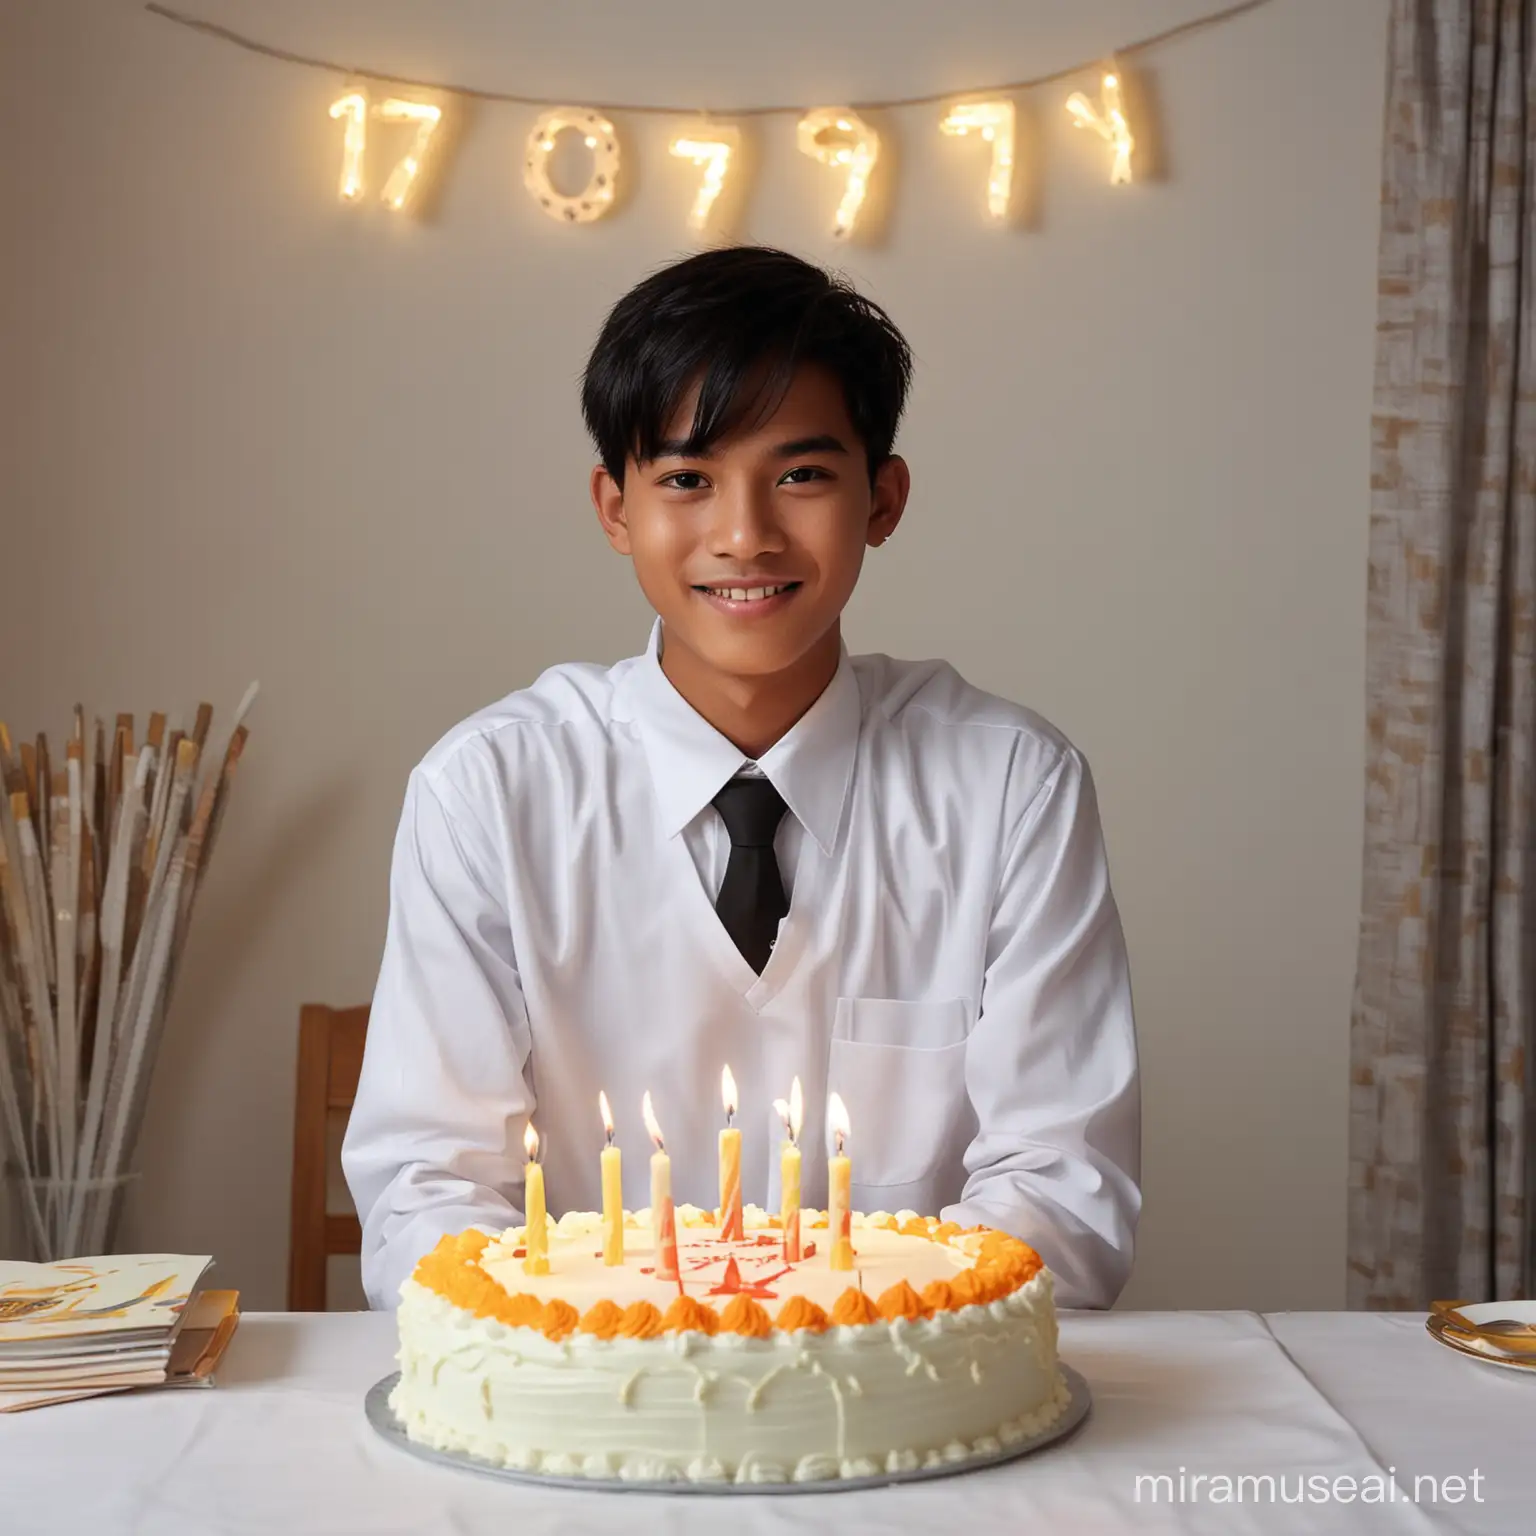 Celebrating 17th Birthday Indonesian Teen in Cheerful School Uniform